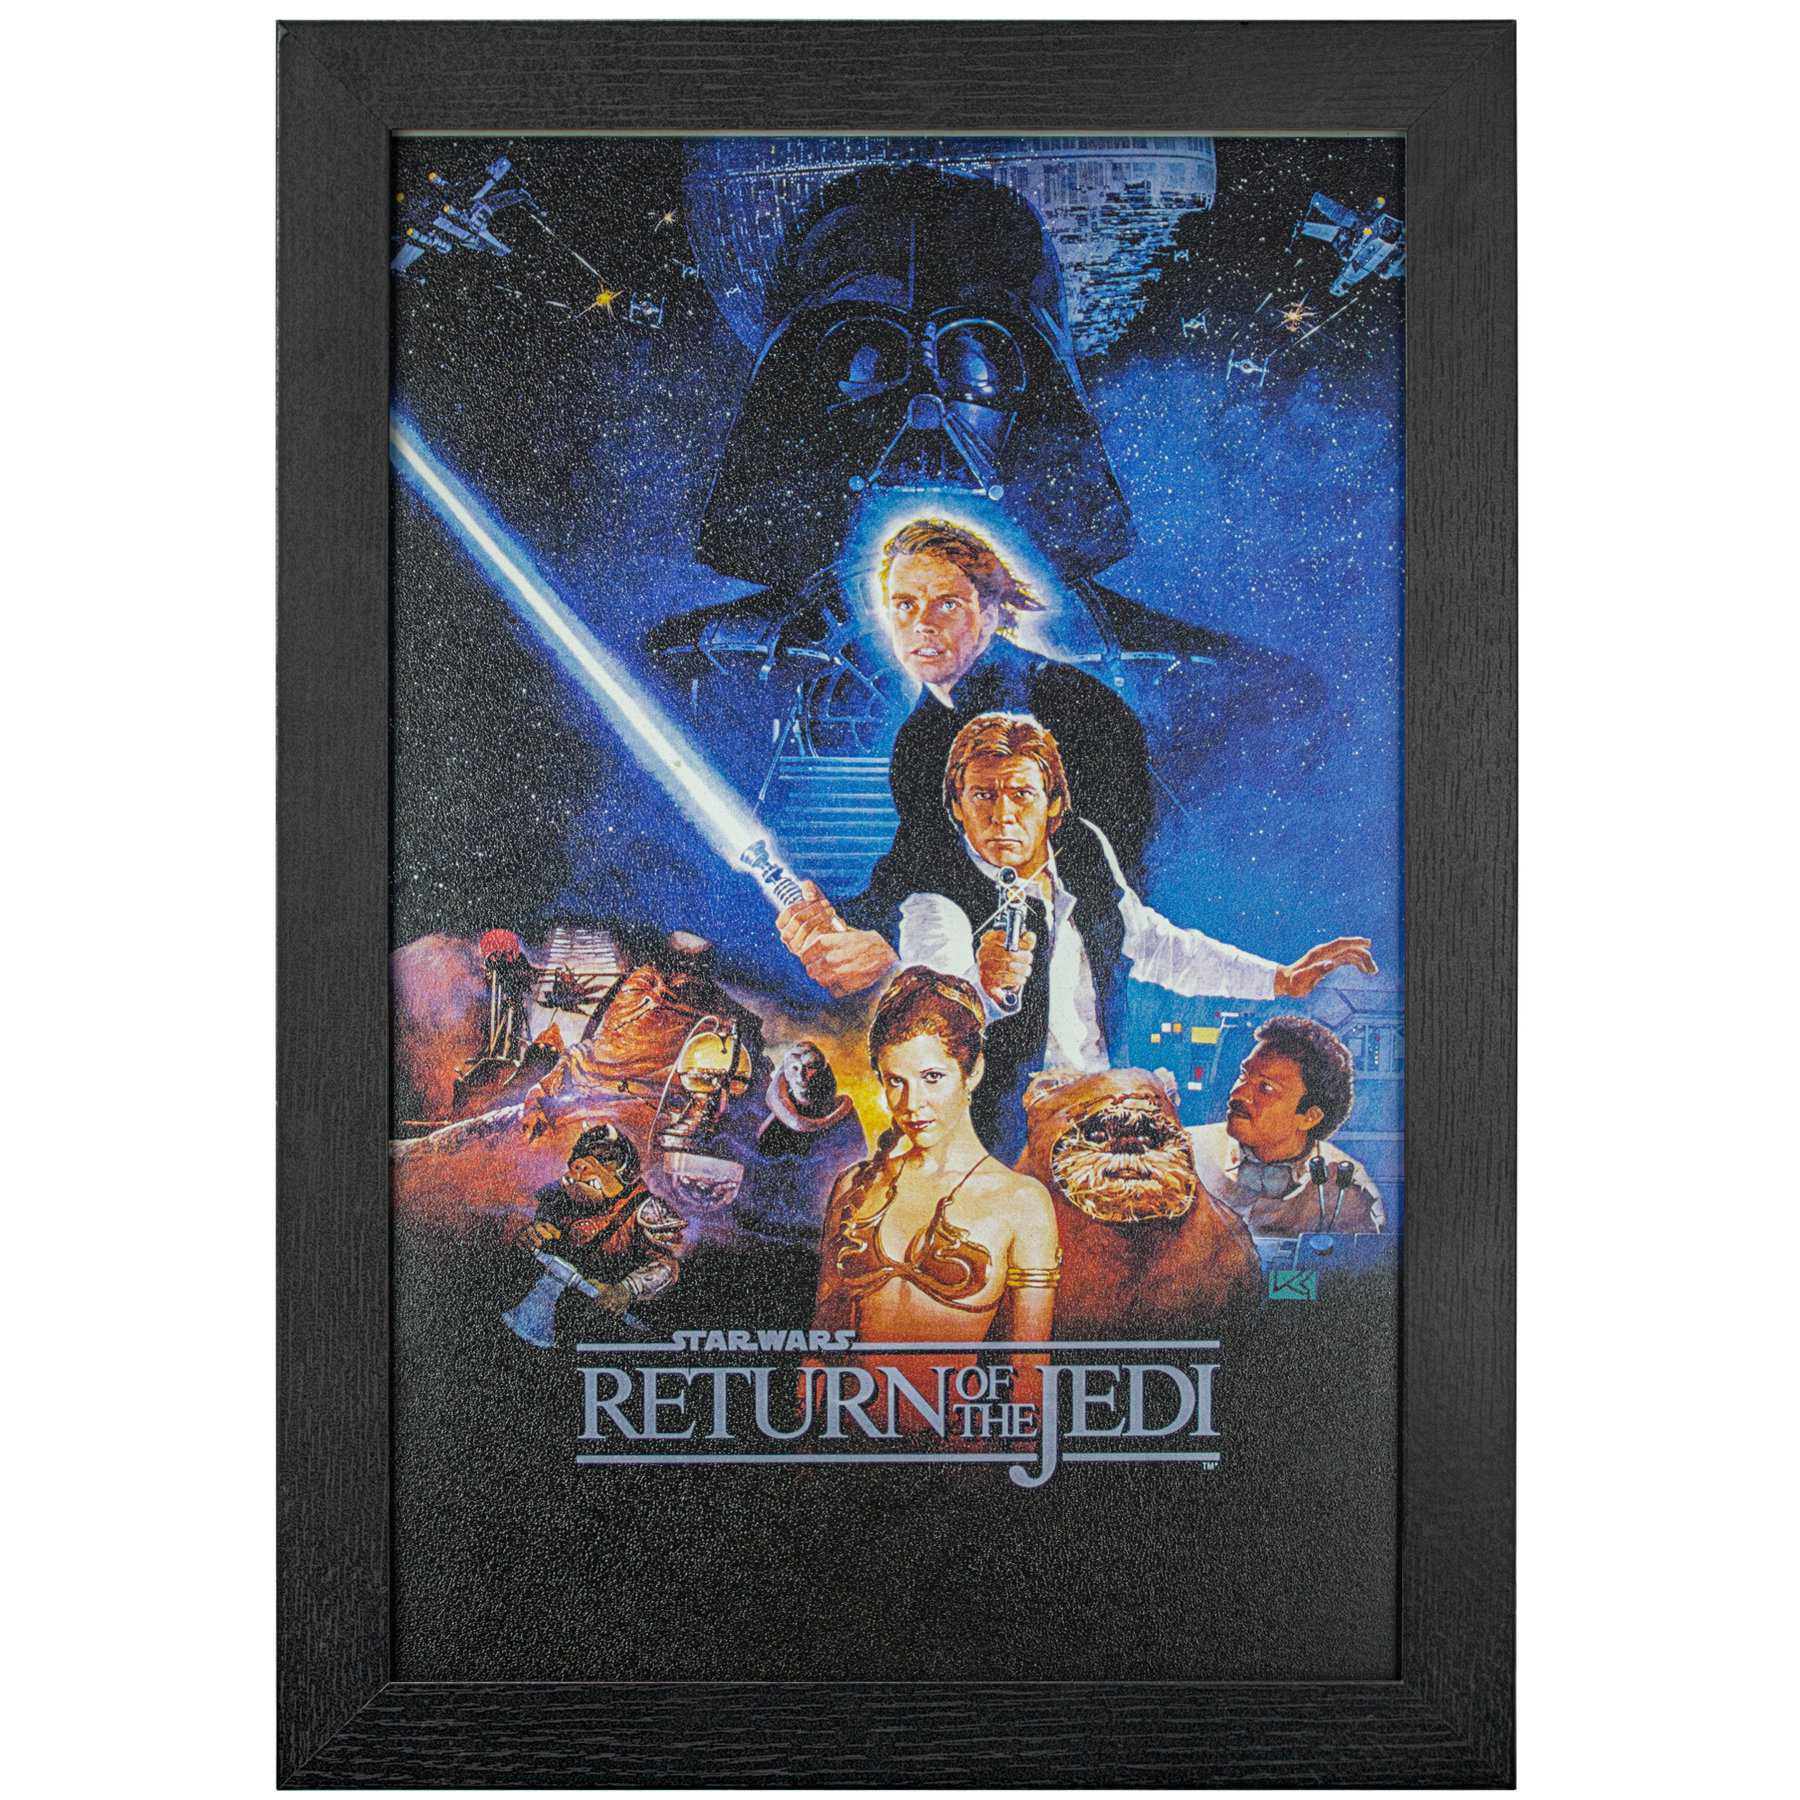 Licensed Framed Art - Star Wars Return of the Jedi